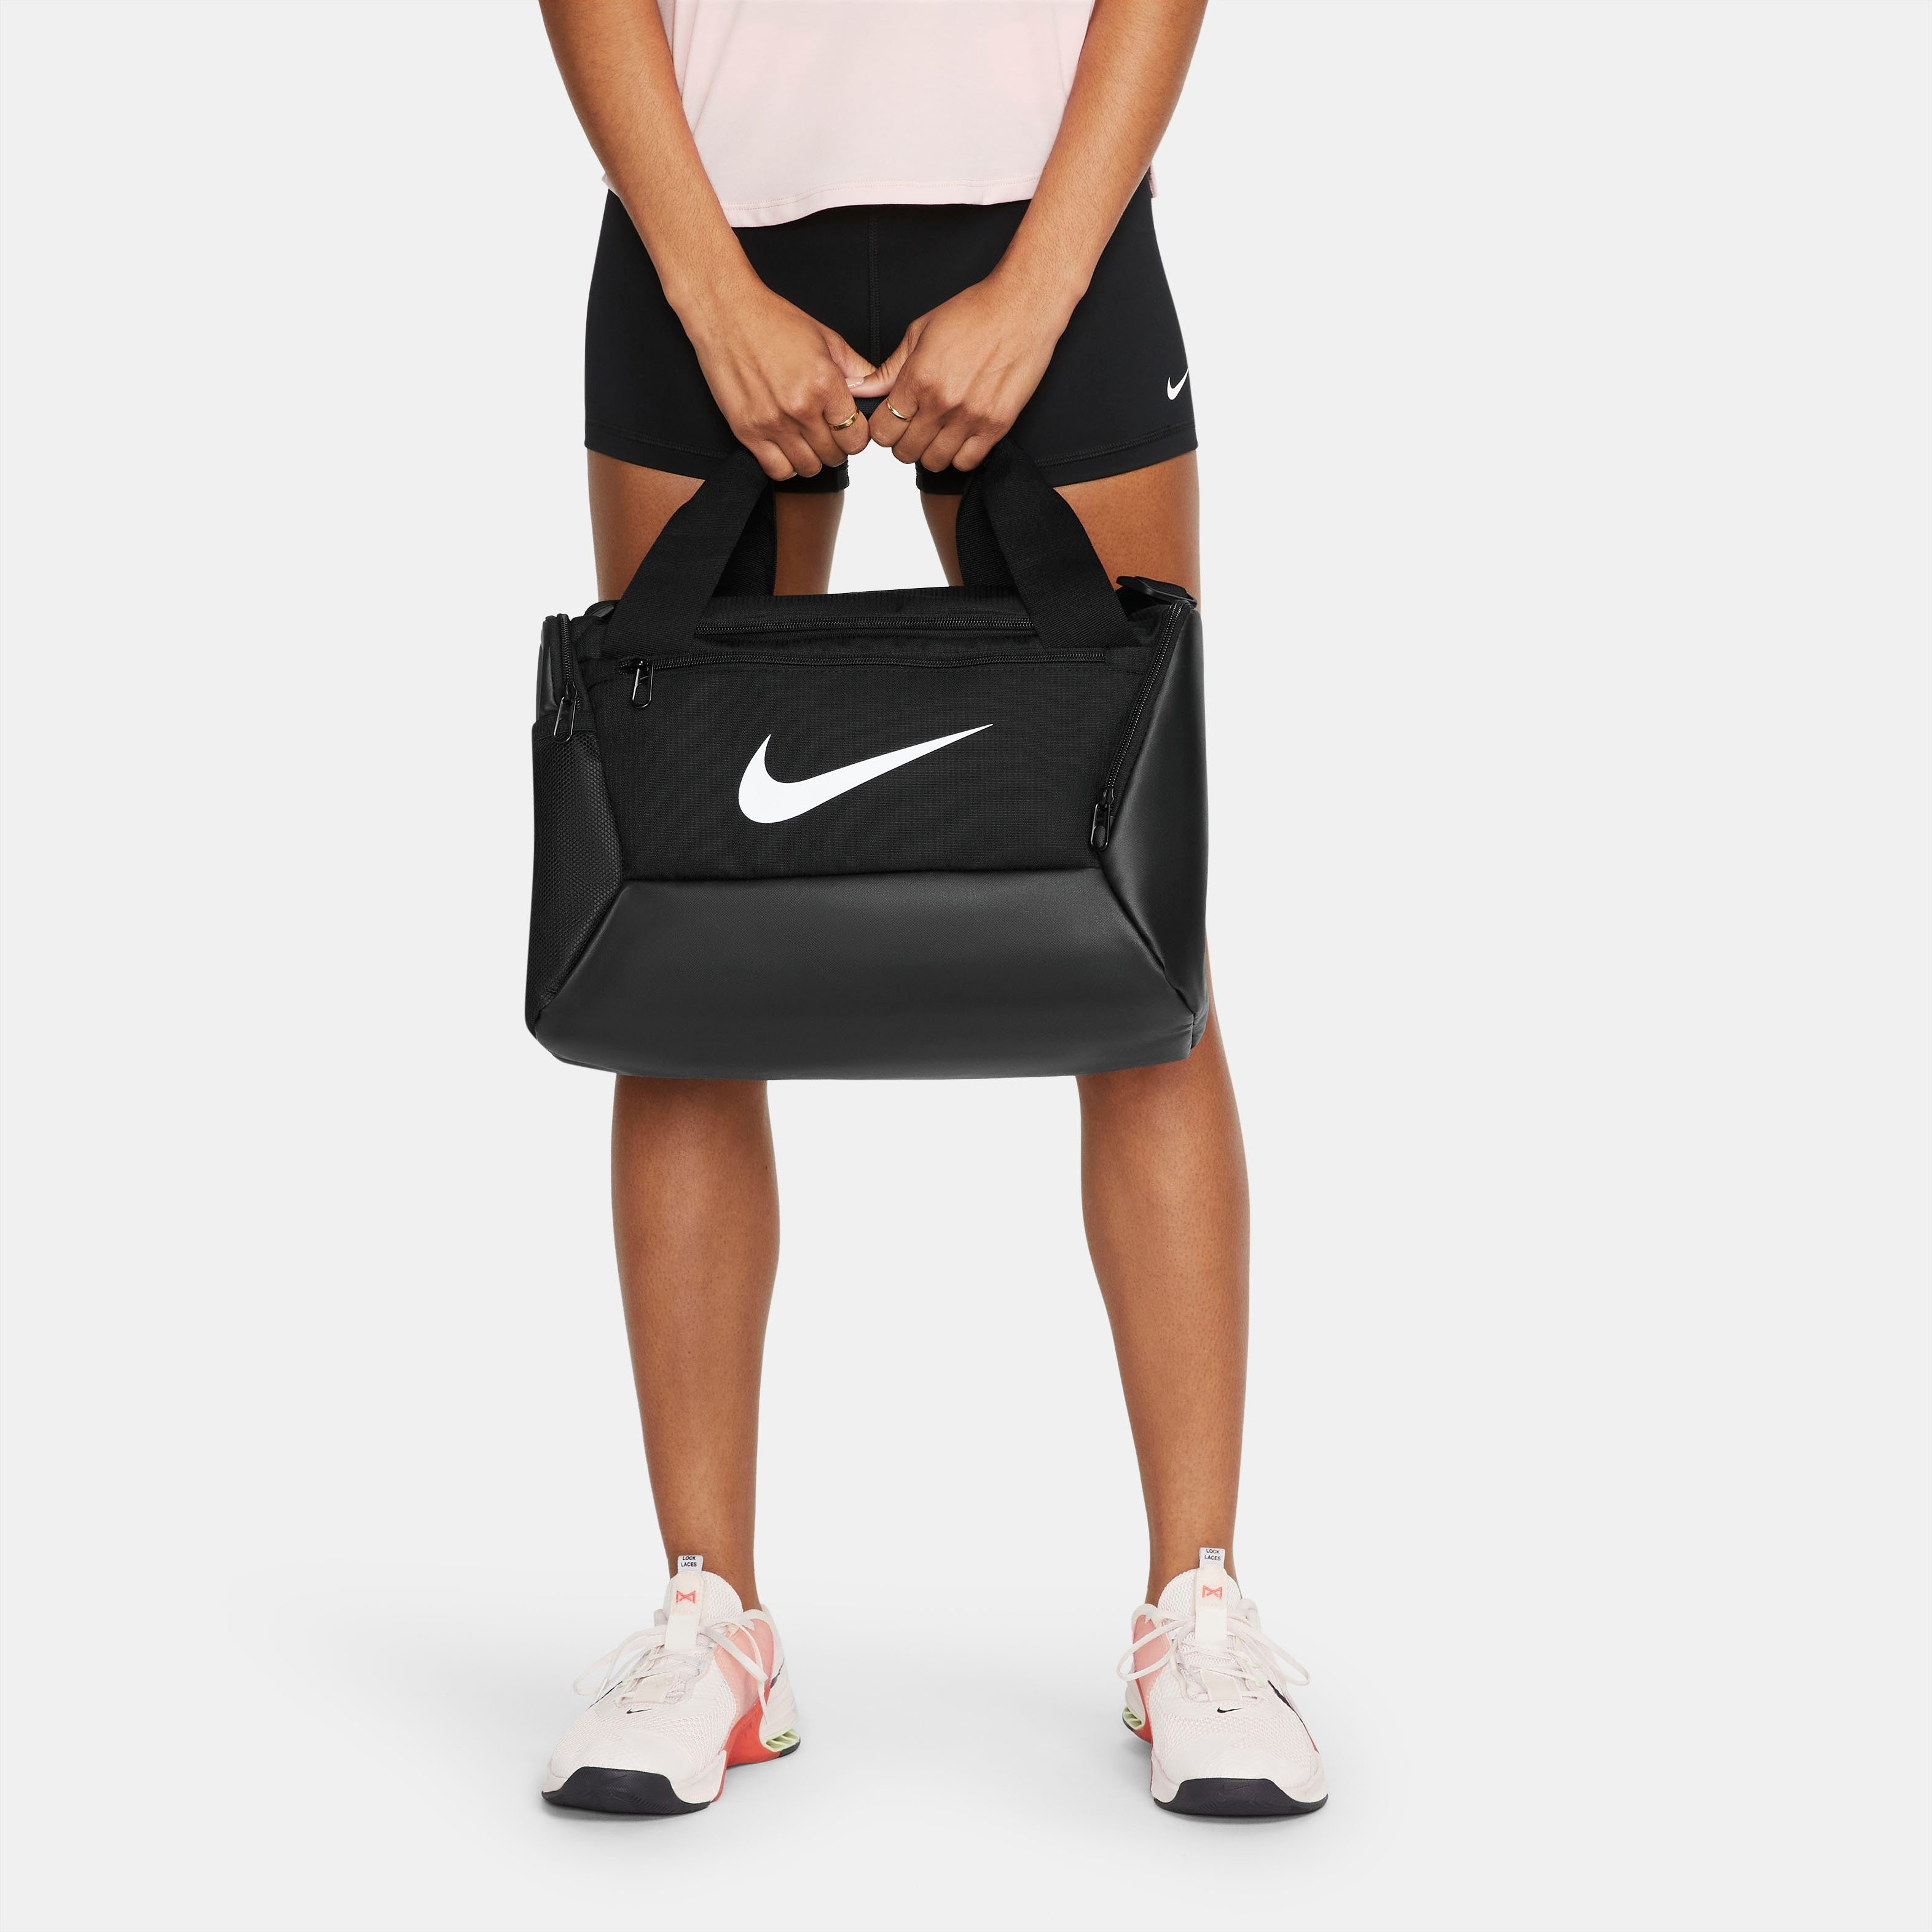 Nike Sporttasche »BRASILIA 9.5 TRAINING DUFFEL BAG« online kaufen | OTTO